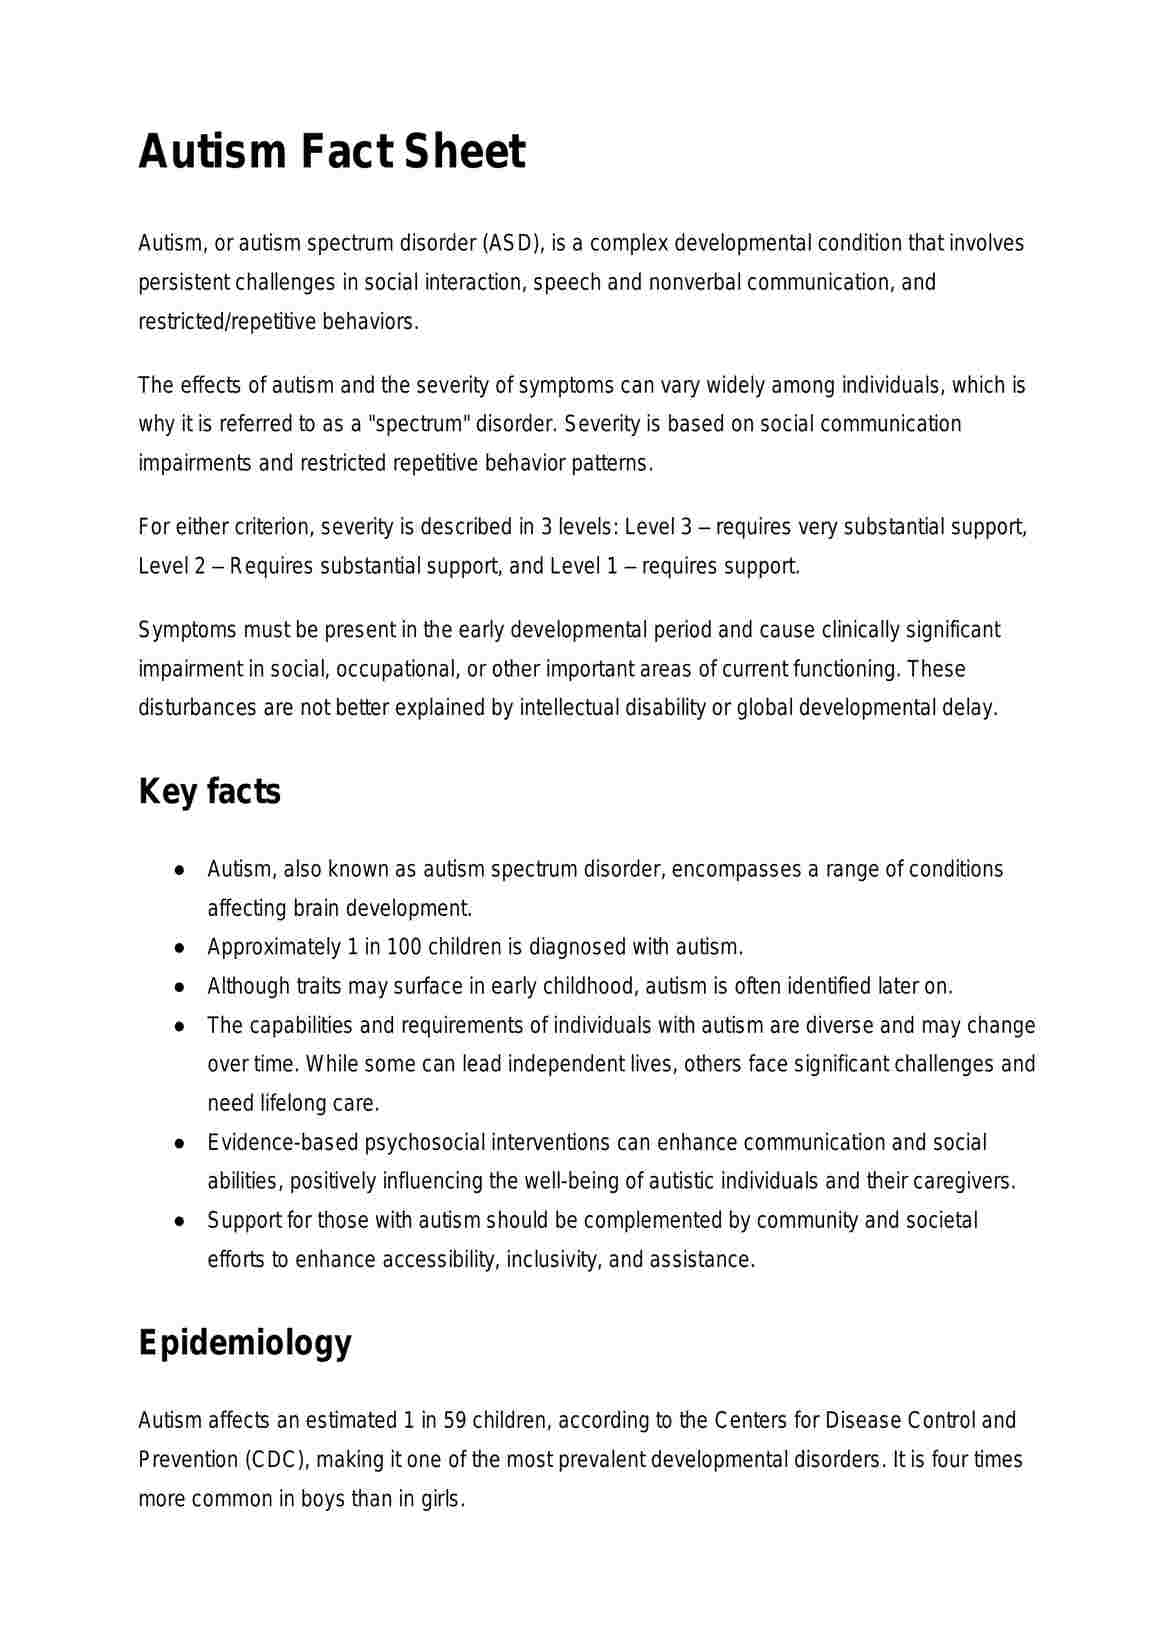 Autism Fact Sheet PDF Example